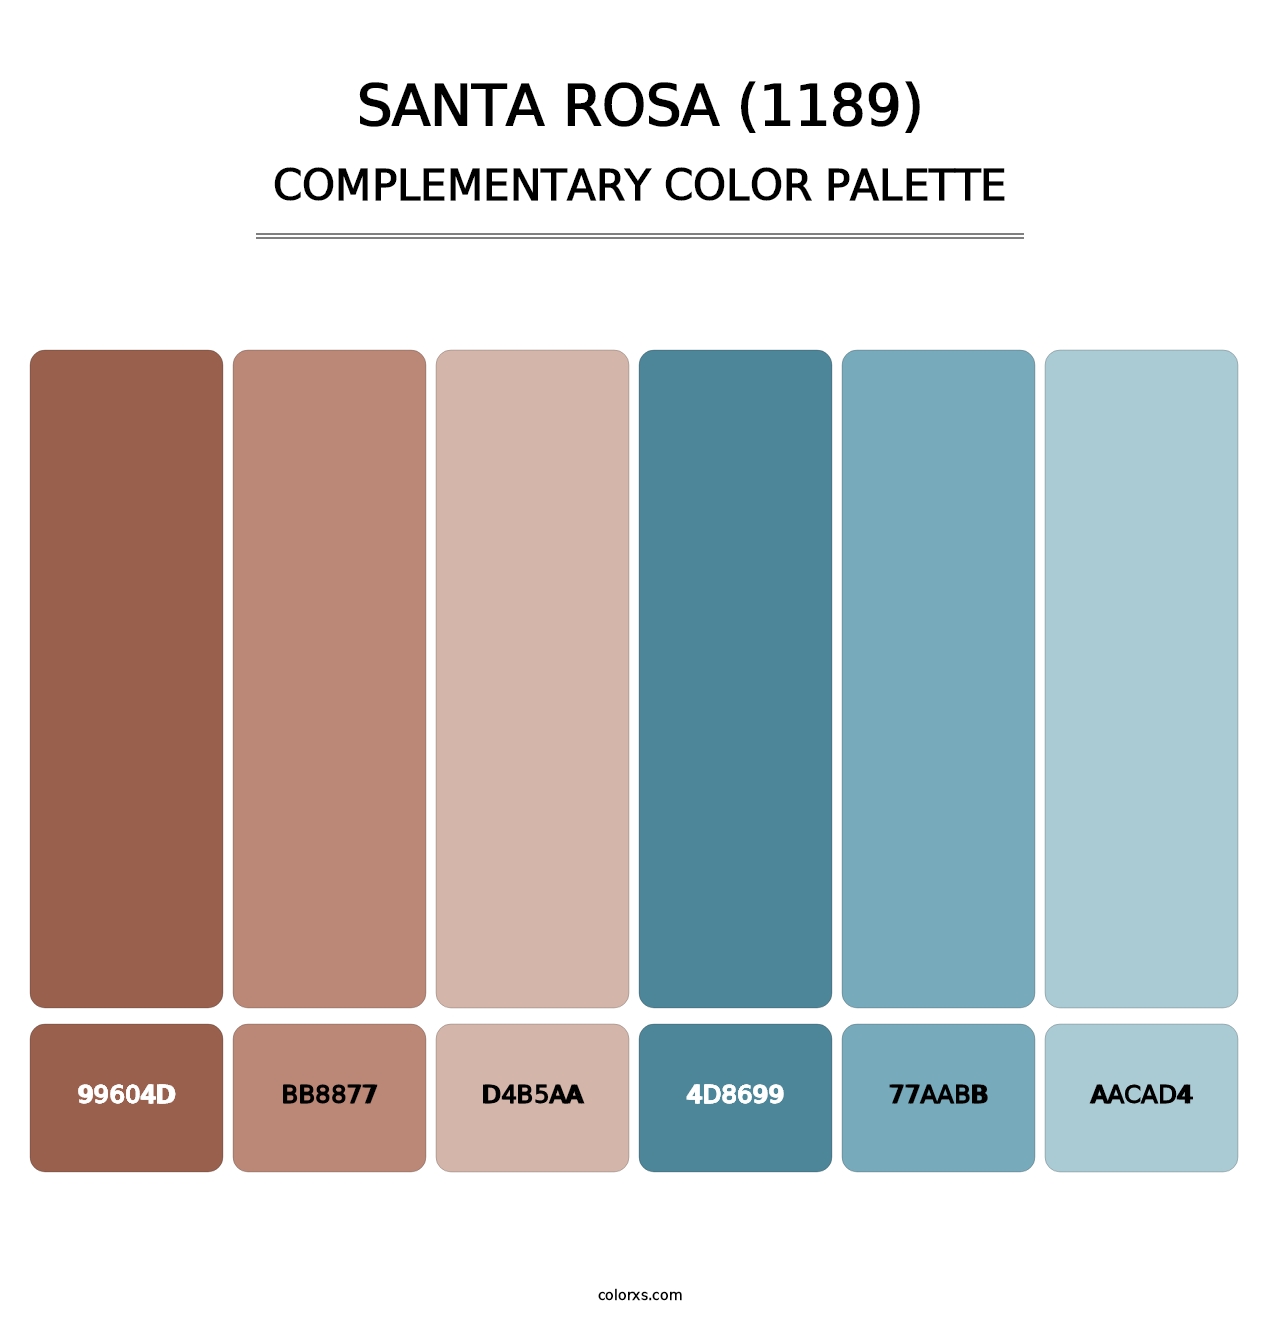 Santa Rosa (1189) - Complementary Color Palette